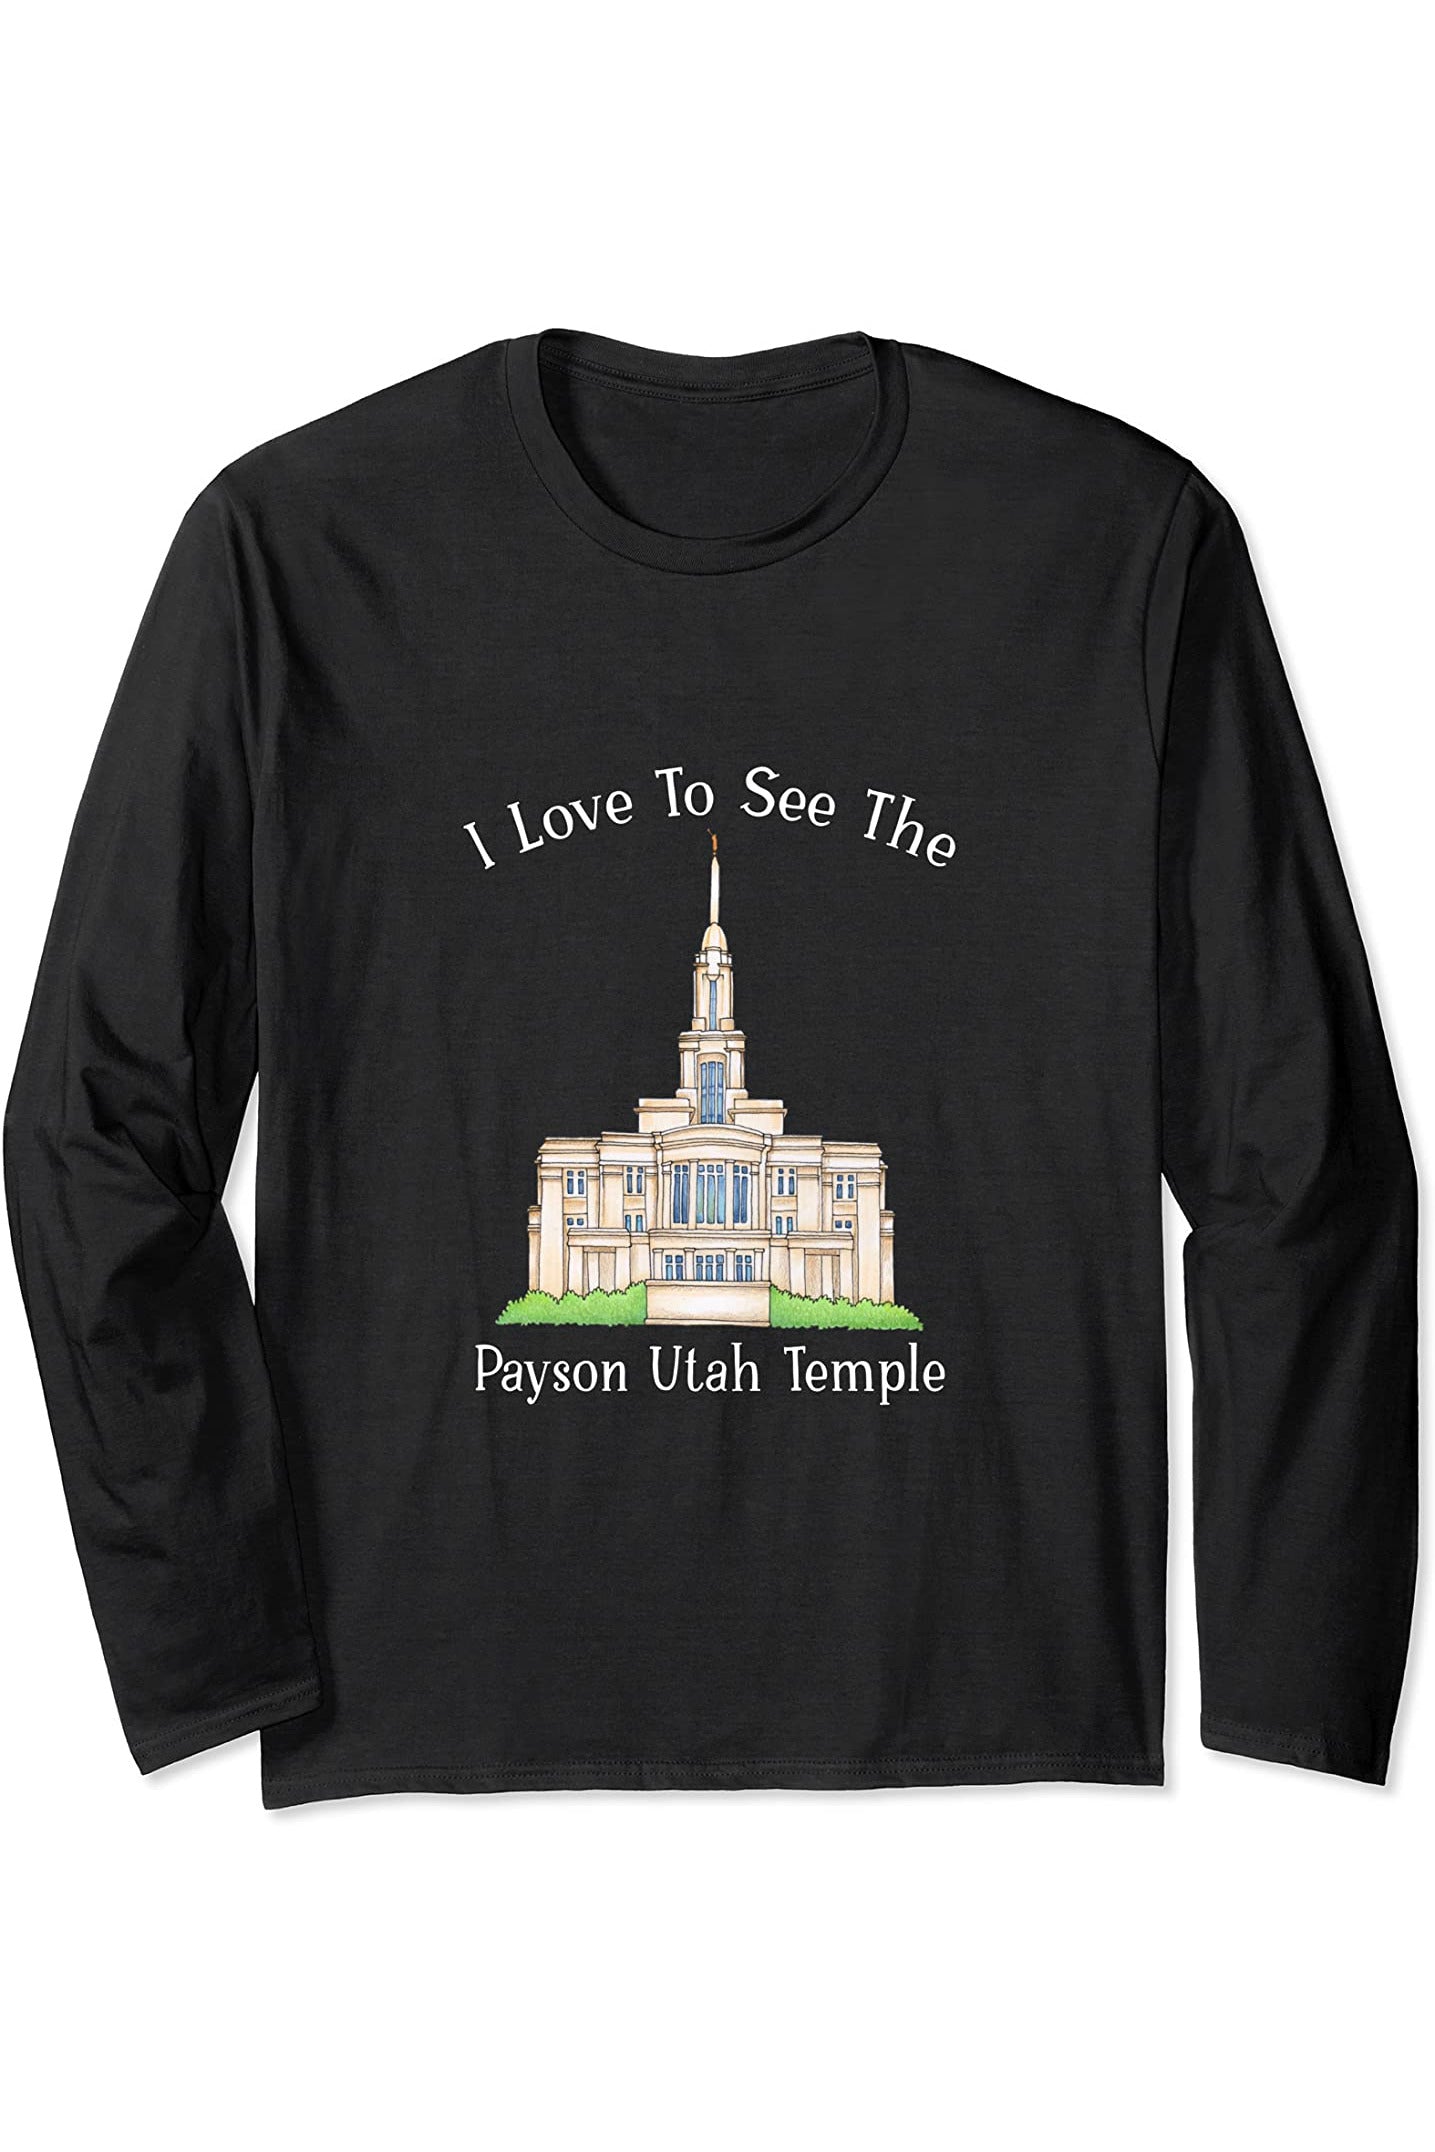 Payson Utah Temple Long Sleeve T-Shirt - Happy Style (English) US